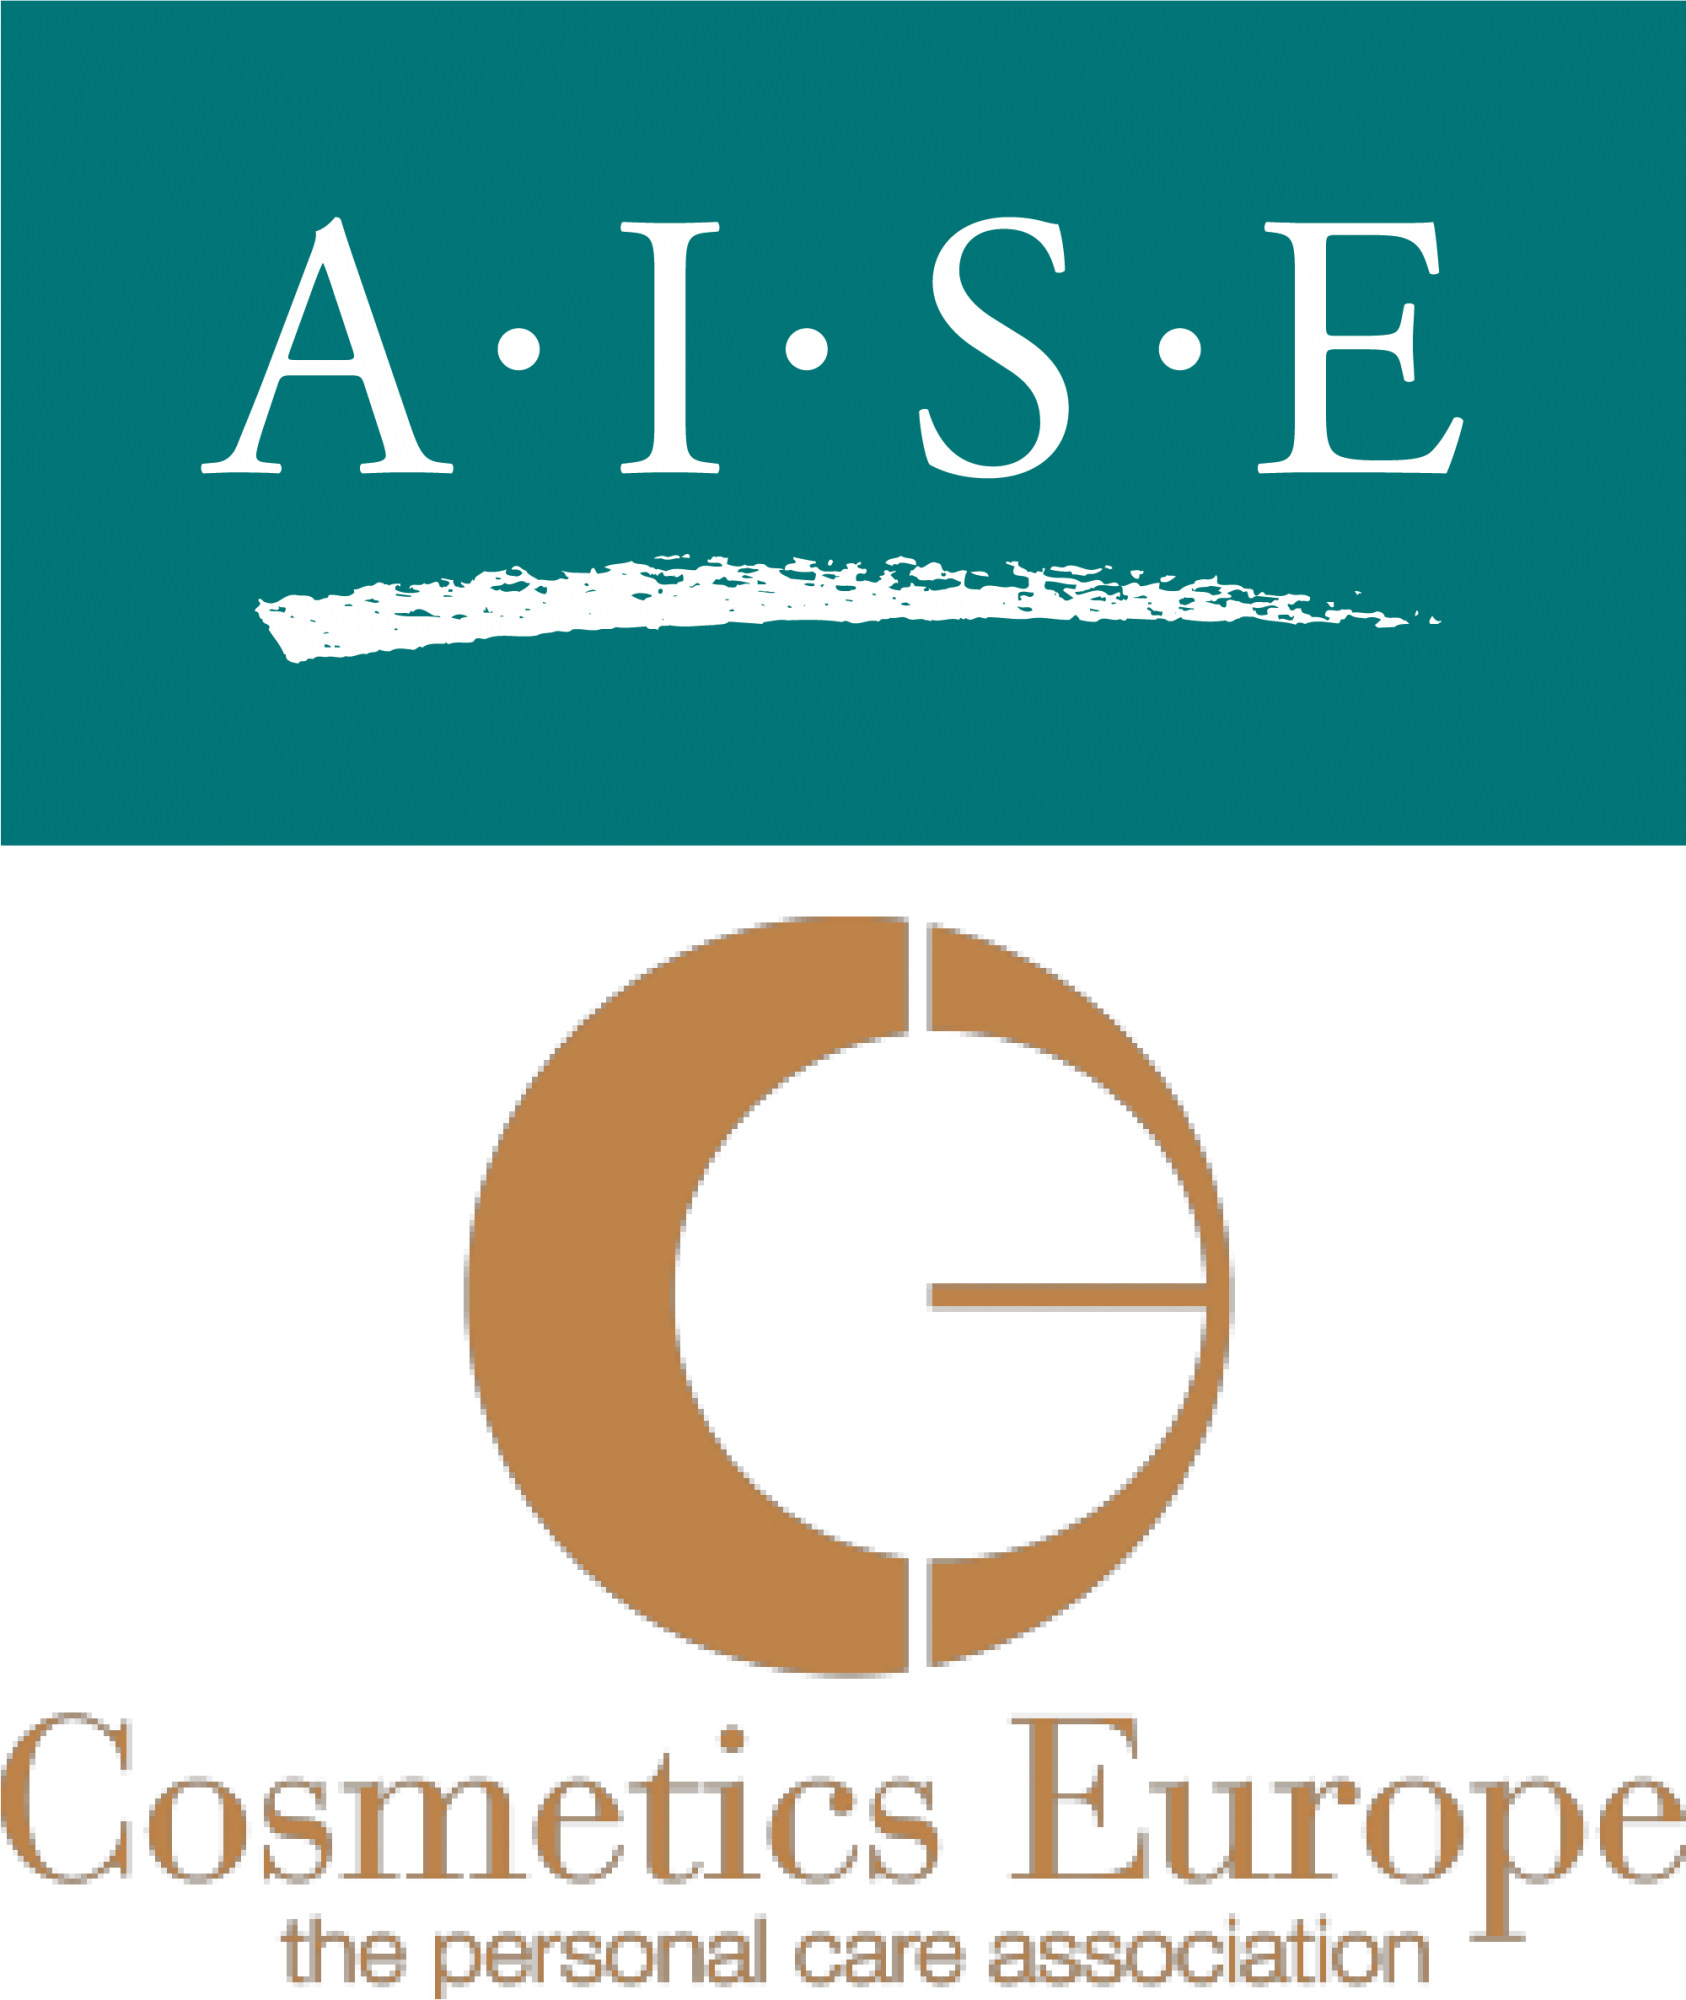 Aise, Cosmetics Europe